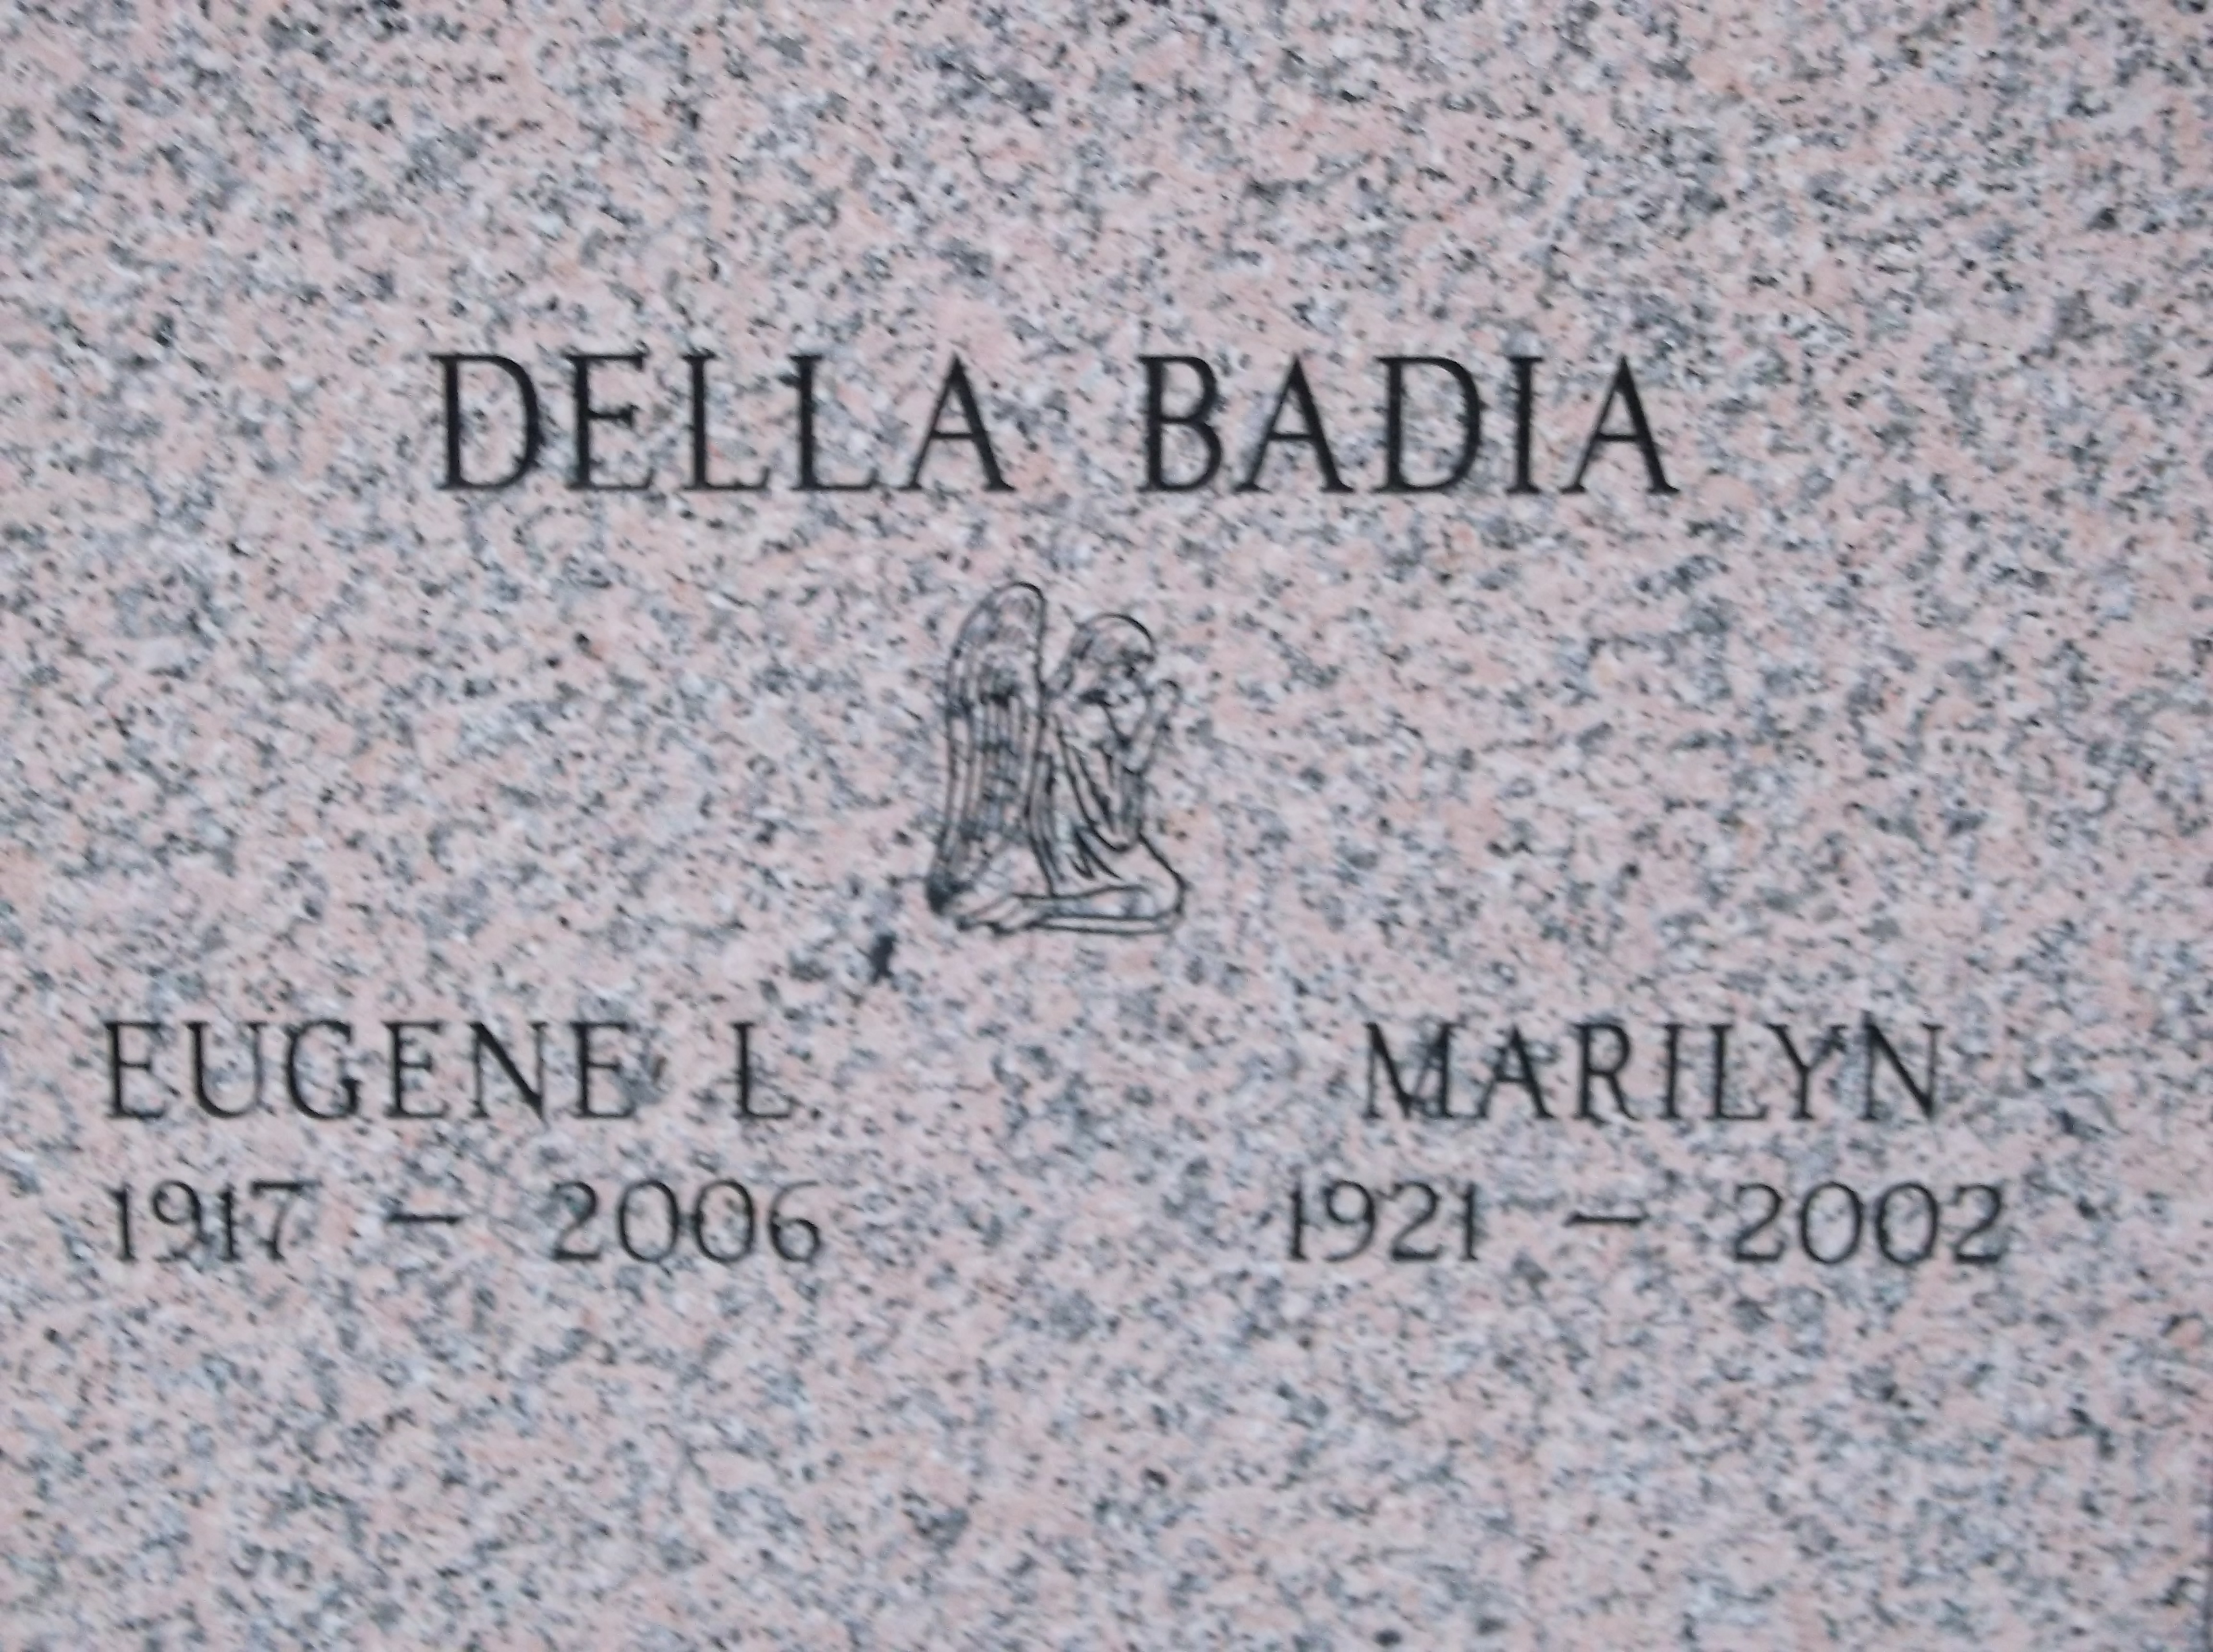 Marilyn Della Badia